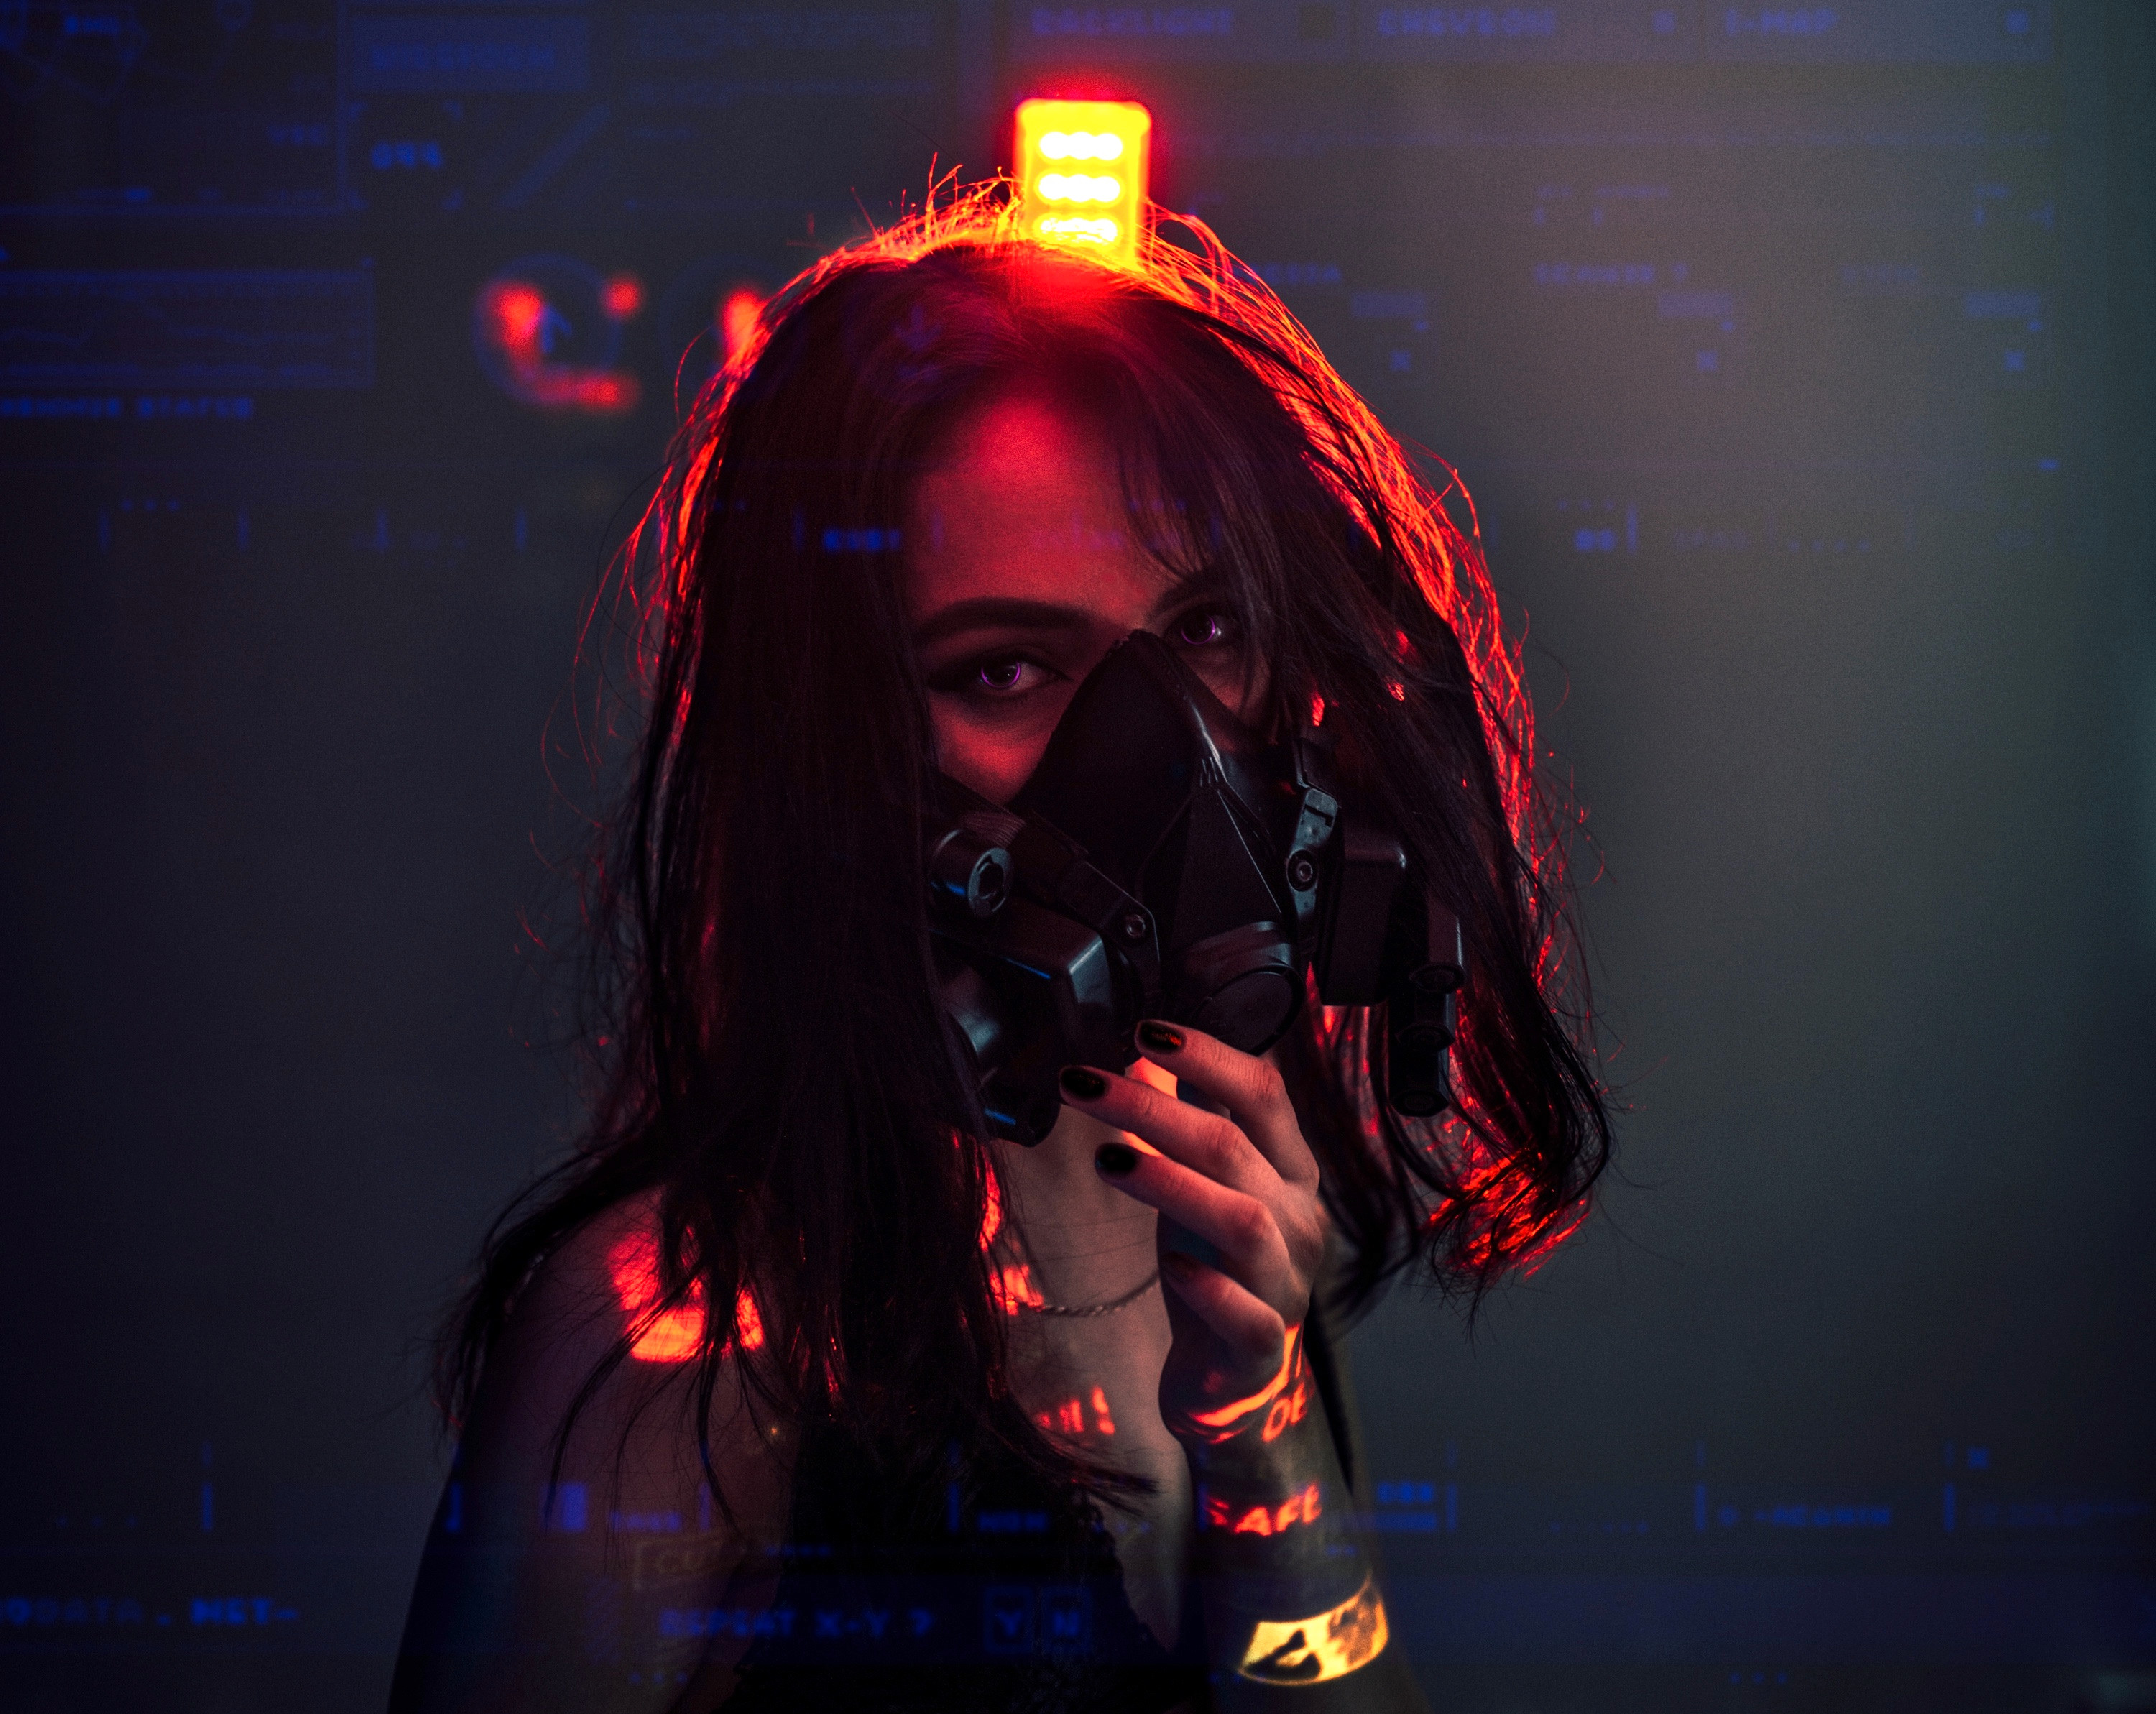 General 3000x2385 Vadim Sadovski cyborg mask looking away red light women dark hair digital art fan art cyberpunk artwork ArtStation